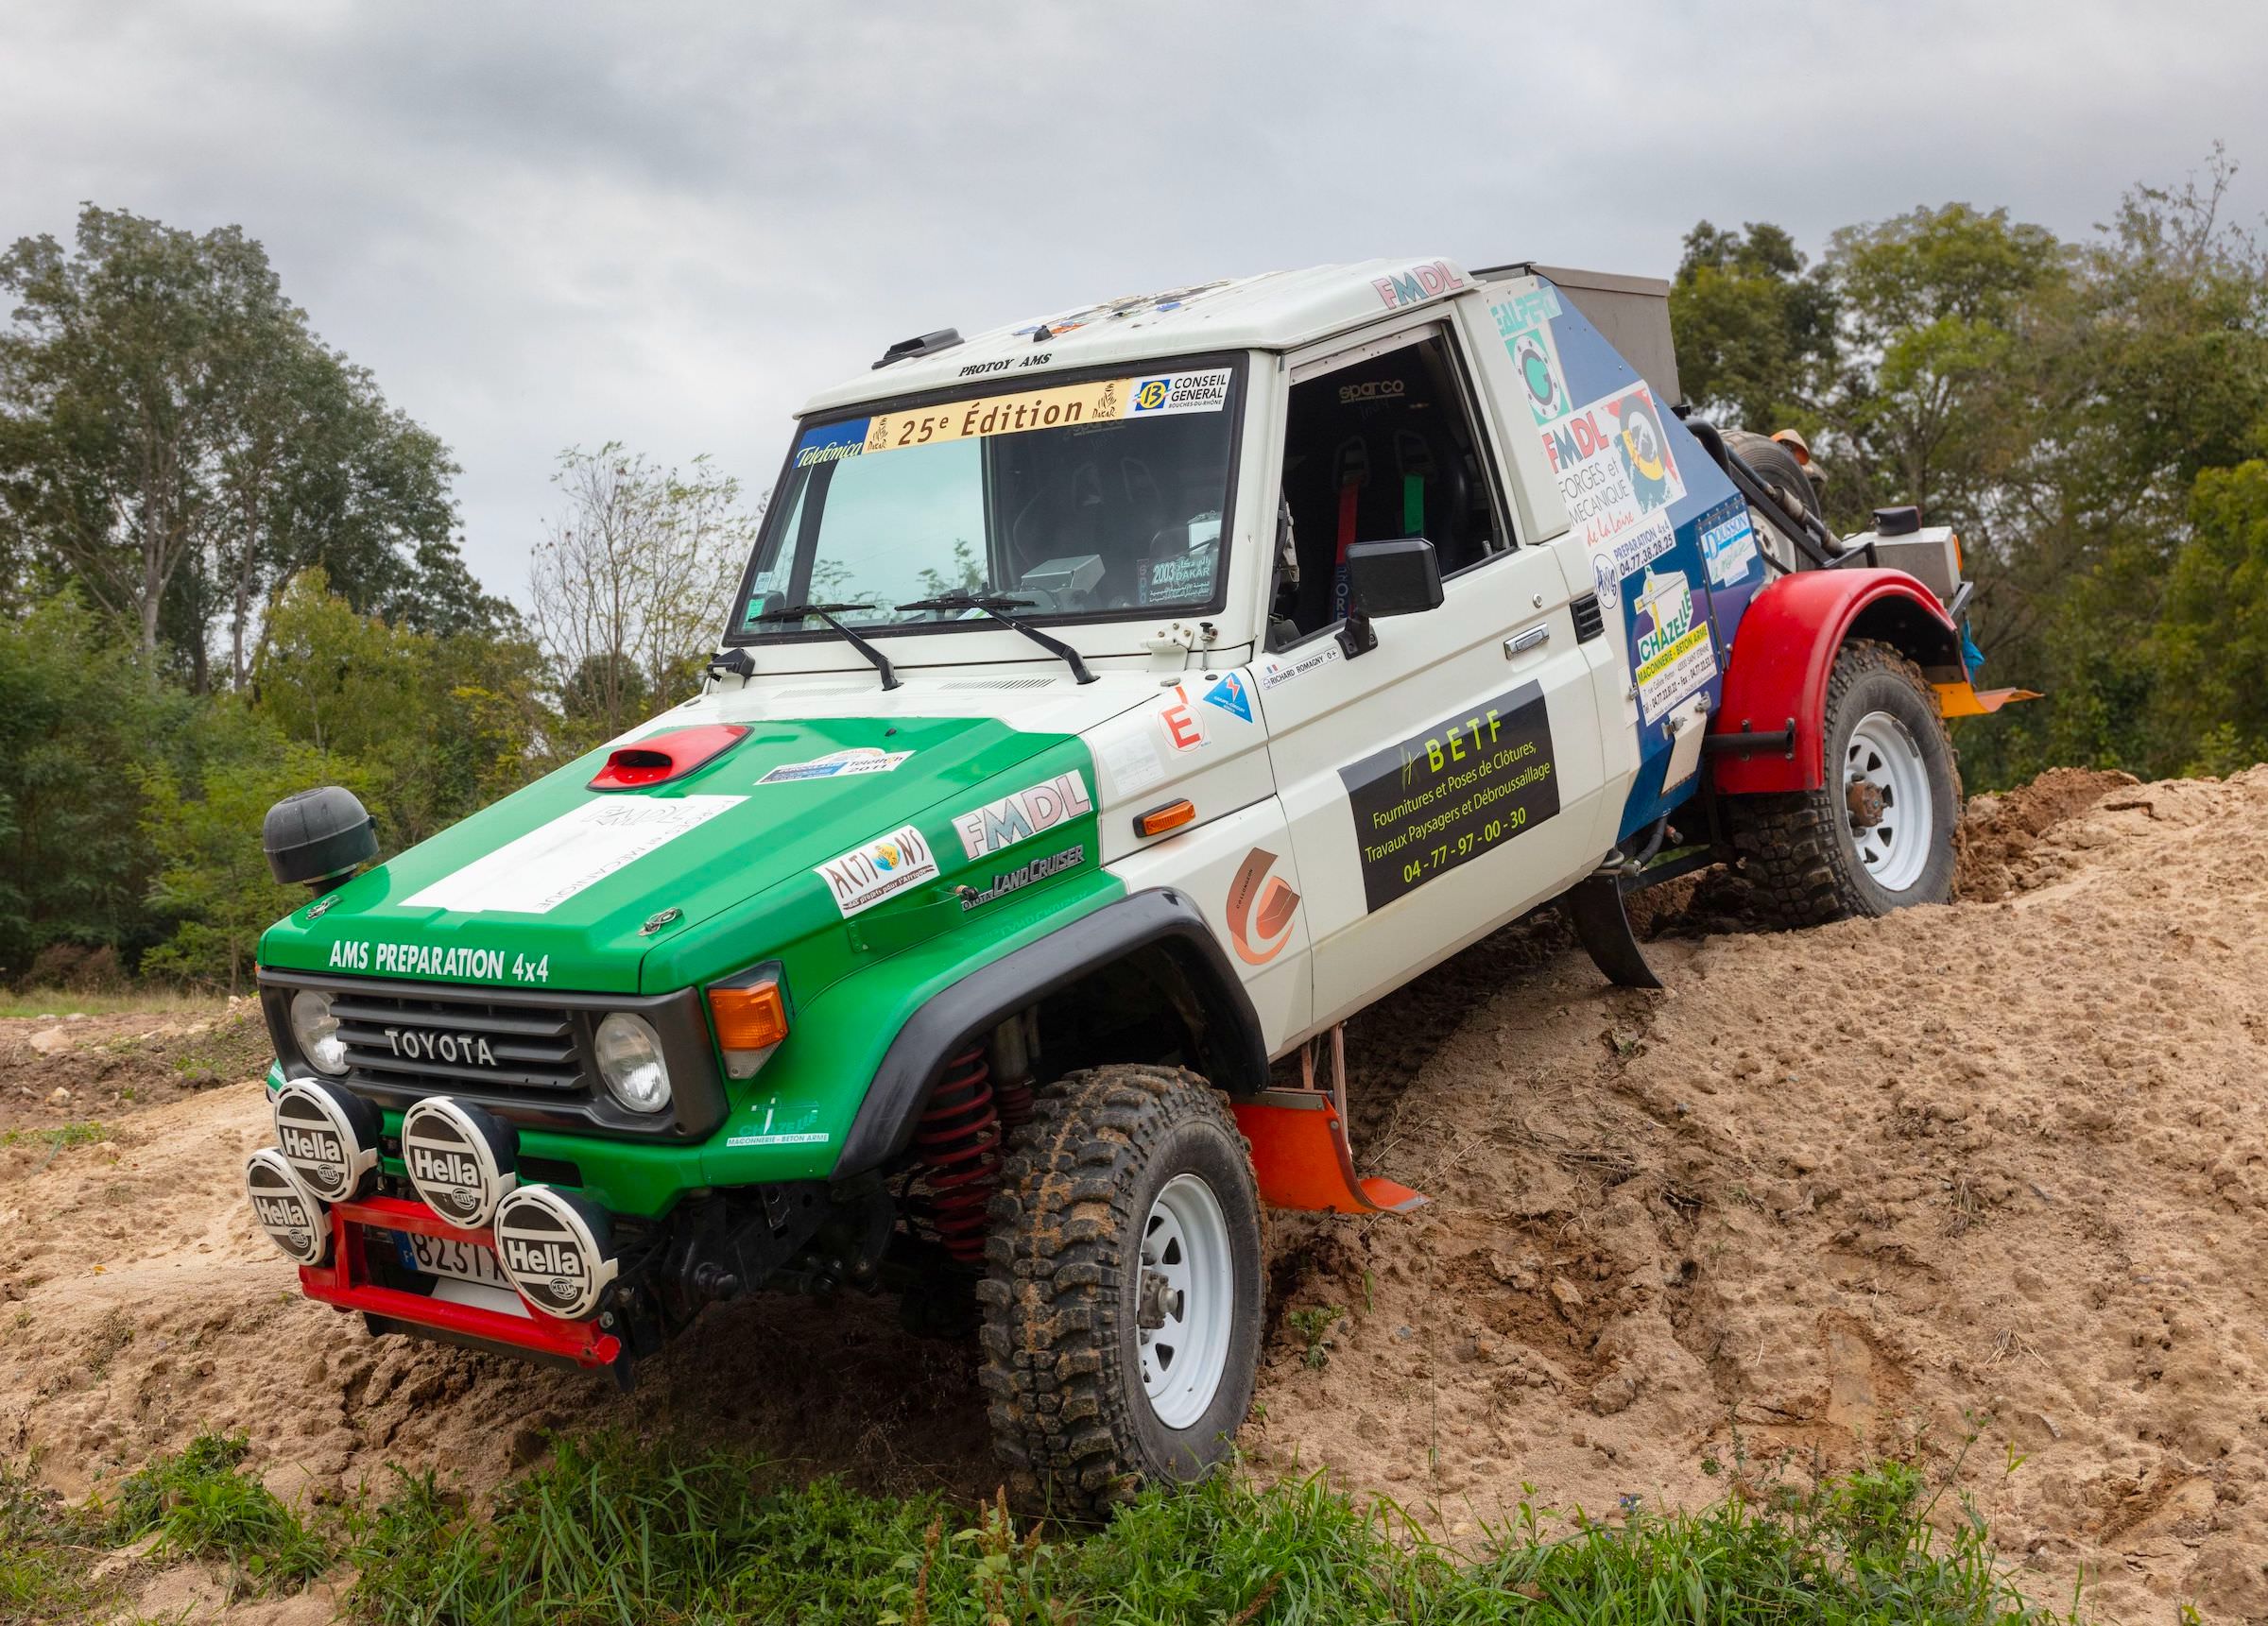 Toyota Land Cruiser Paris-Dakar Rally 5